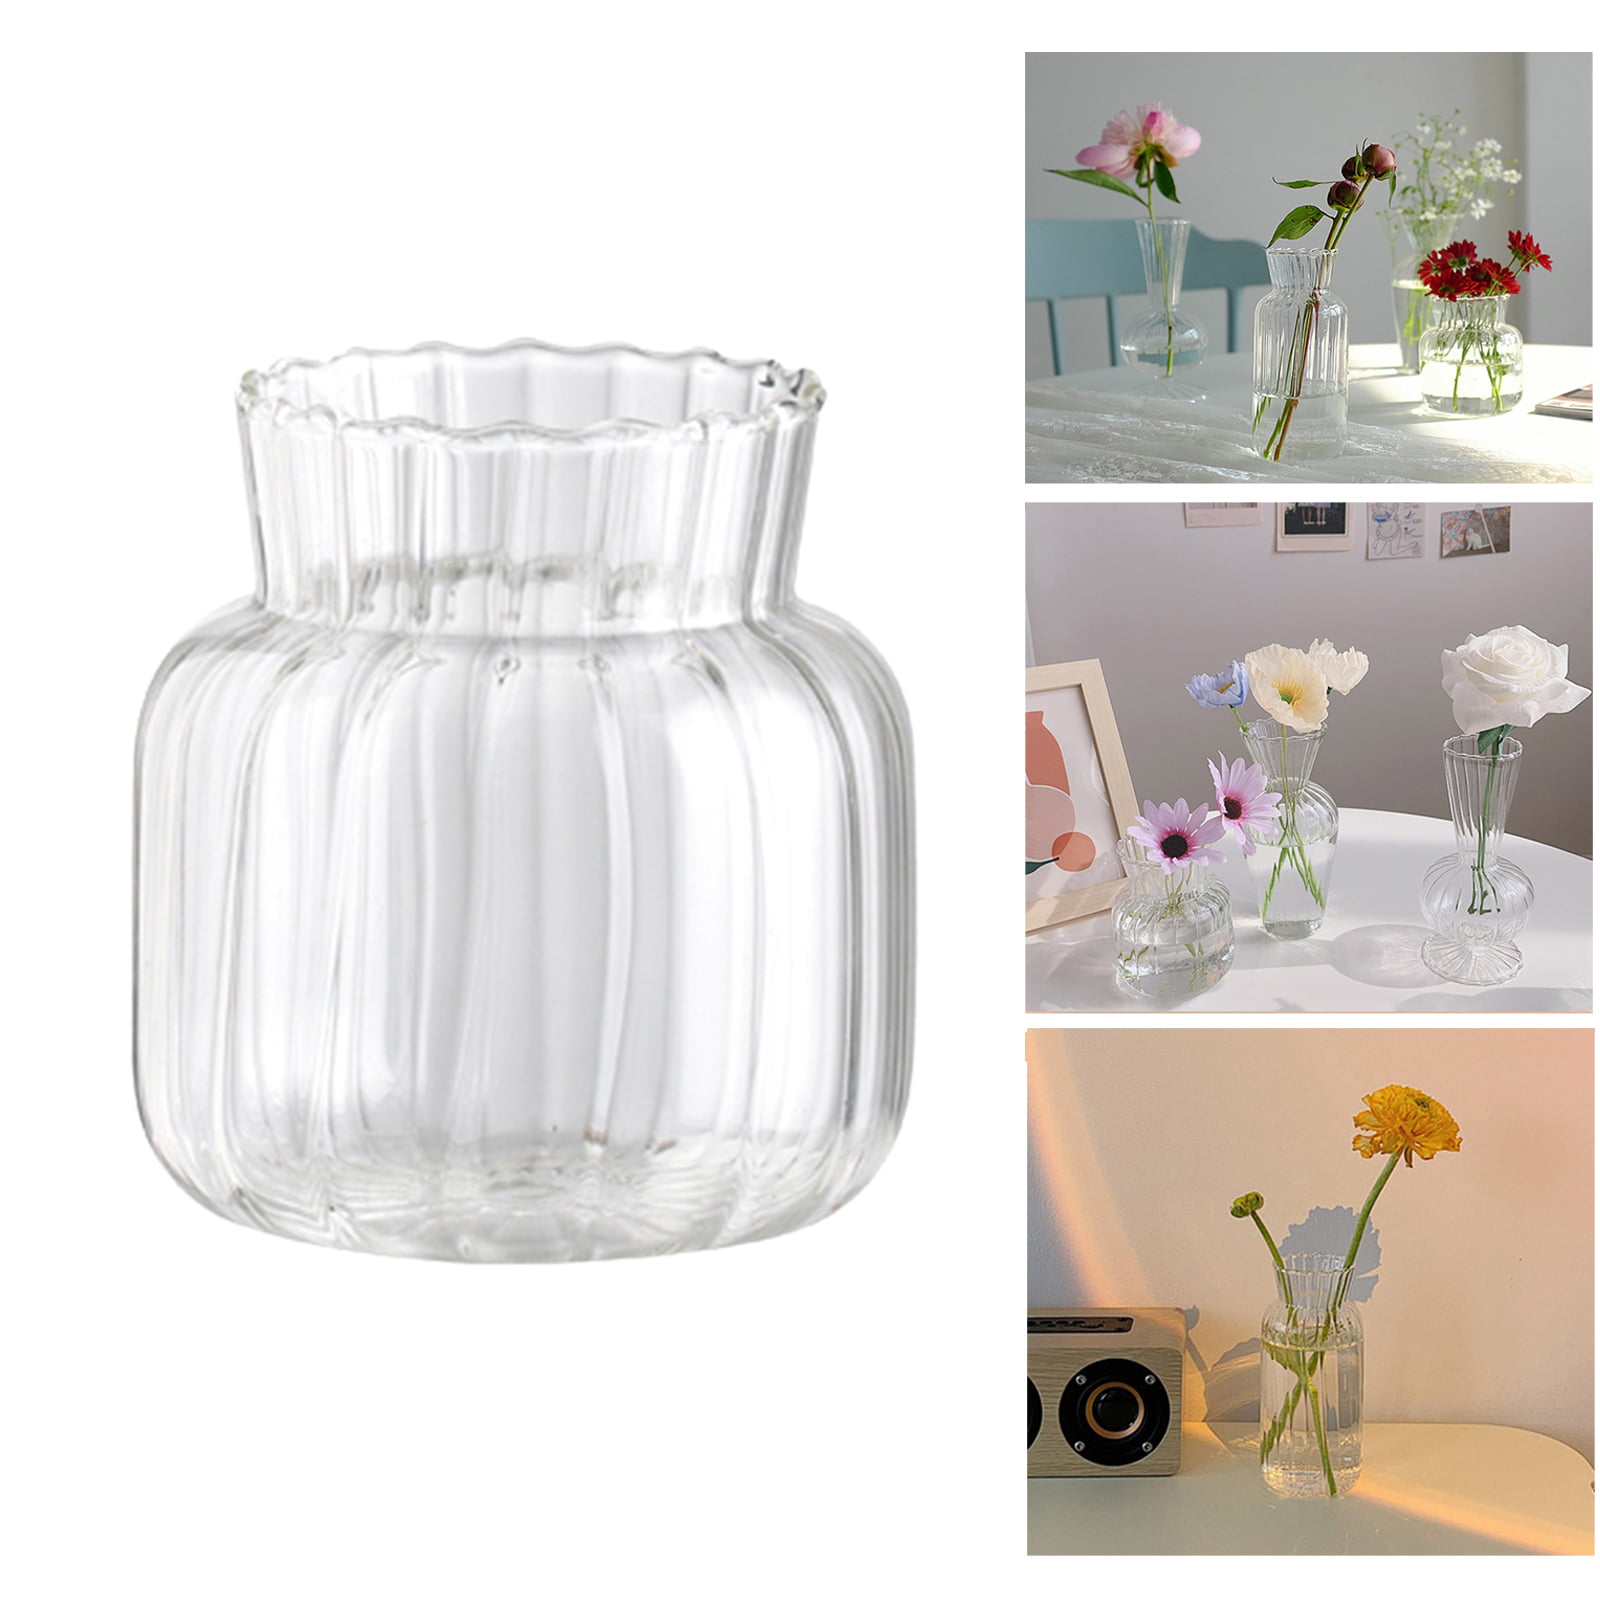 FLAMEER 2X Nordic Ceramic Tabletop Flower Vase Standing Flower Vases Wedding Party Decor 